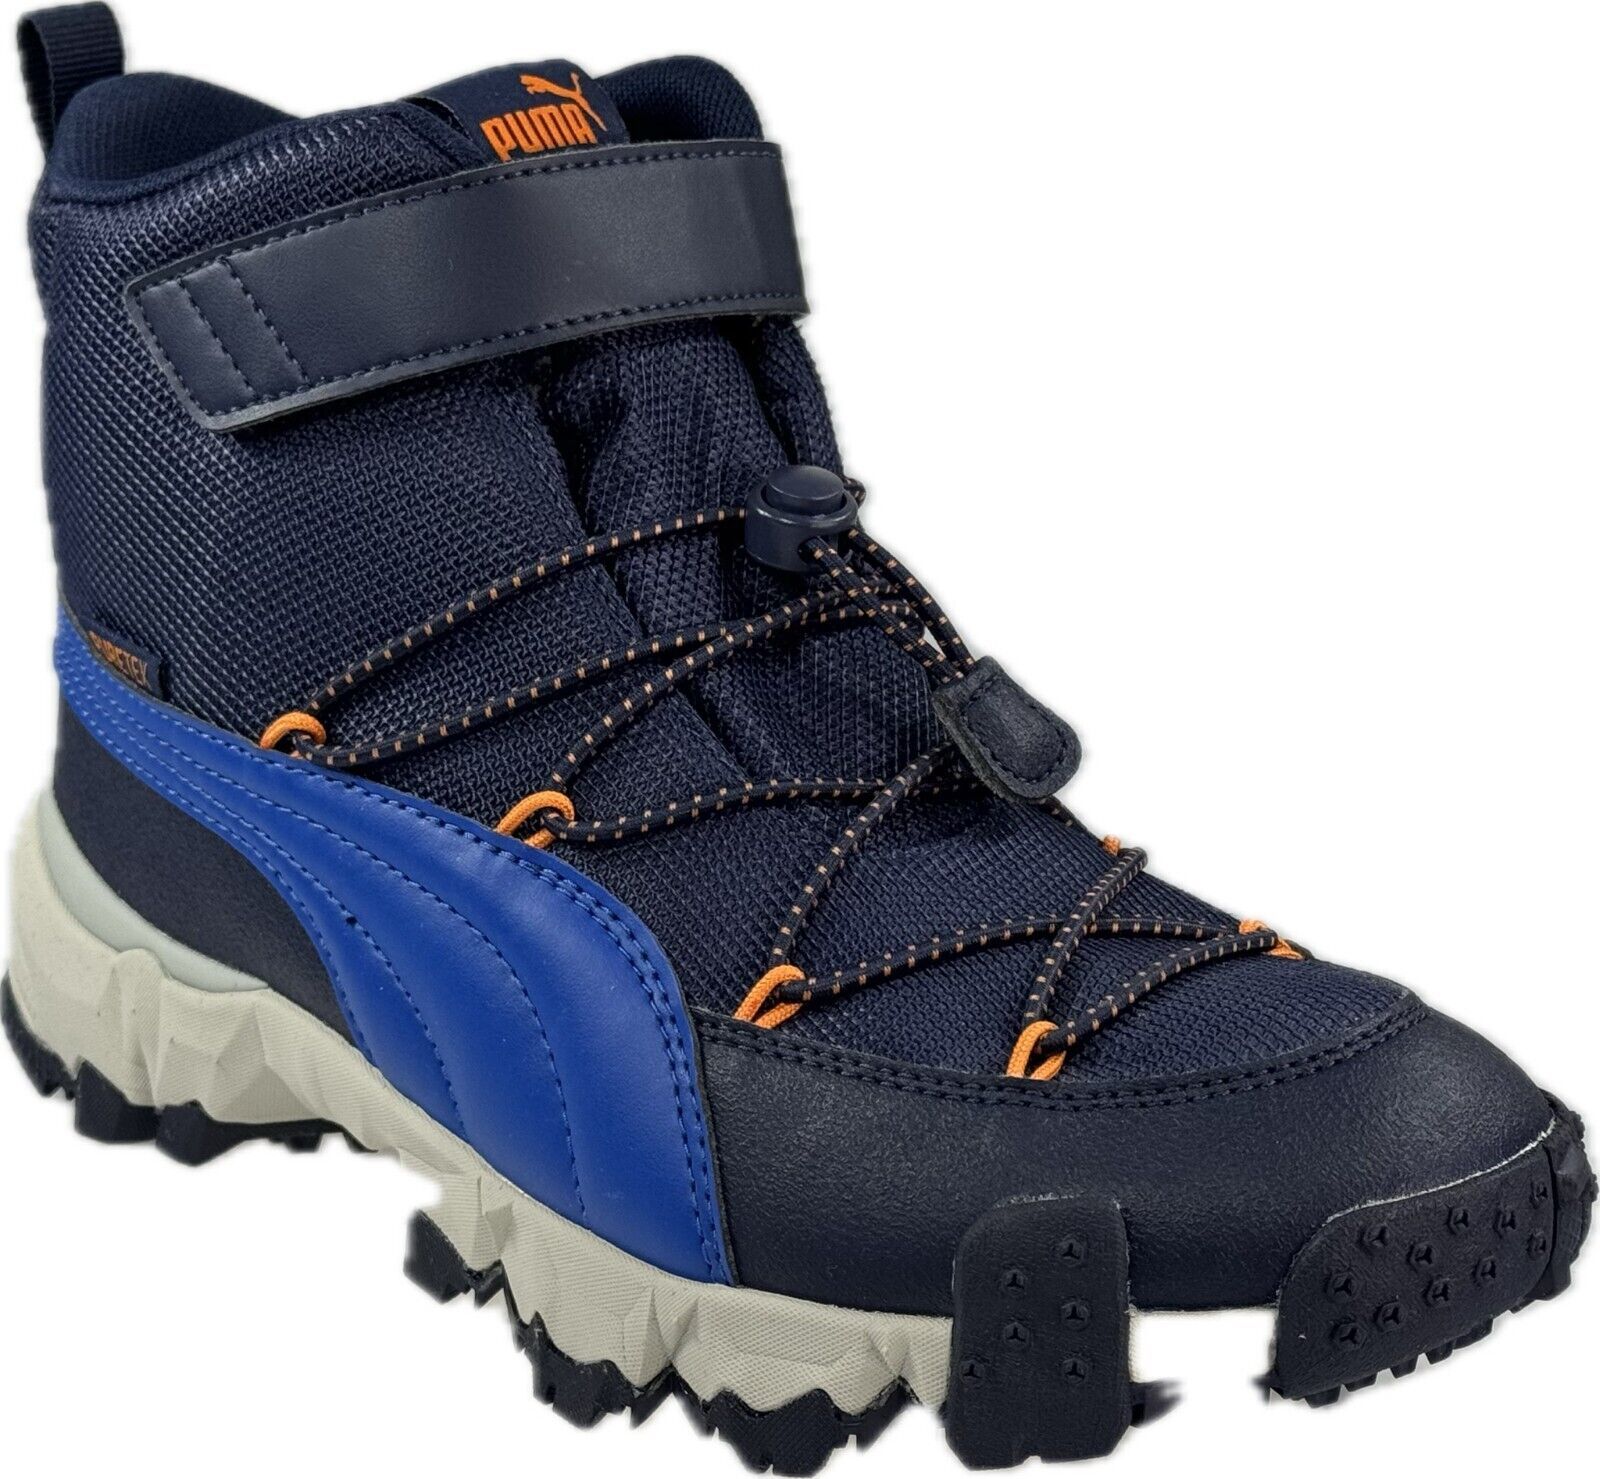 PUMA Maka Puretex V JR Blue Outdoor Winter Boots BOY'S SZ 5.5Y, 6Y, 19291101 - $49.99